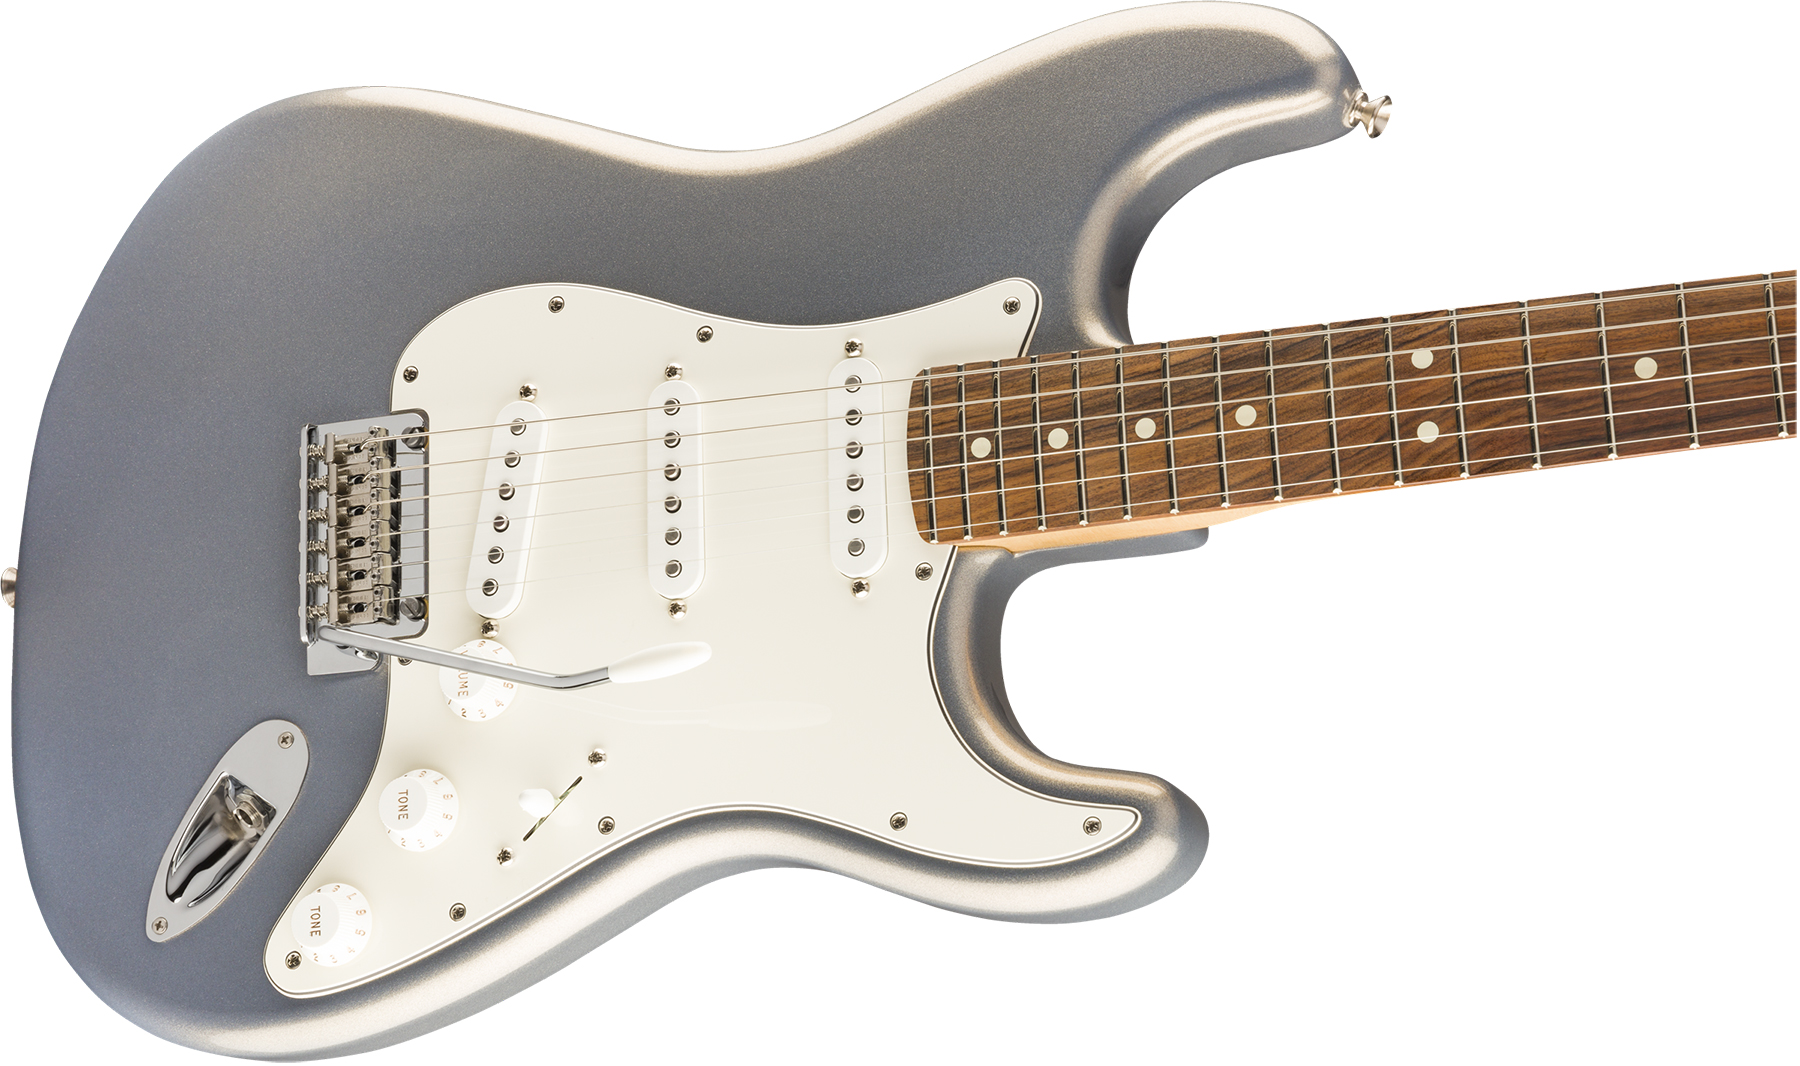 Fender Strat Player Mex 3s Trem Pf - Silver - Str shape electric guitar - Variation 2